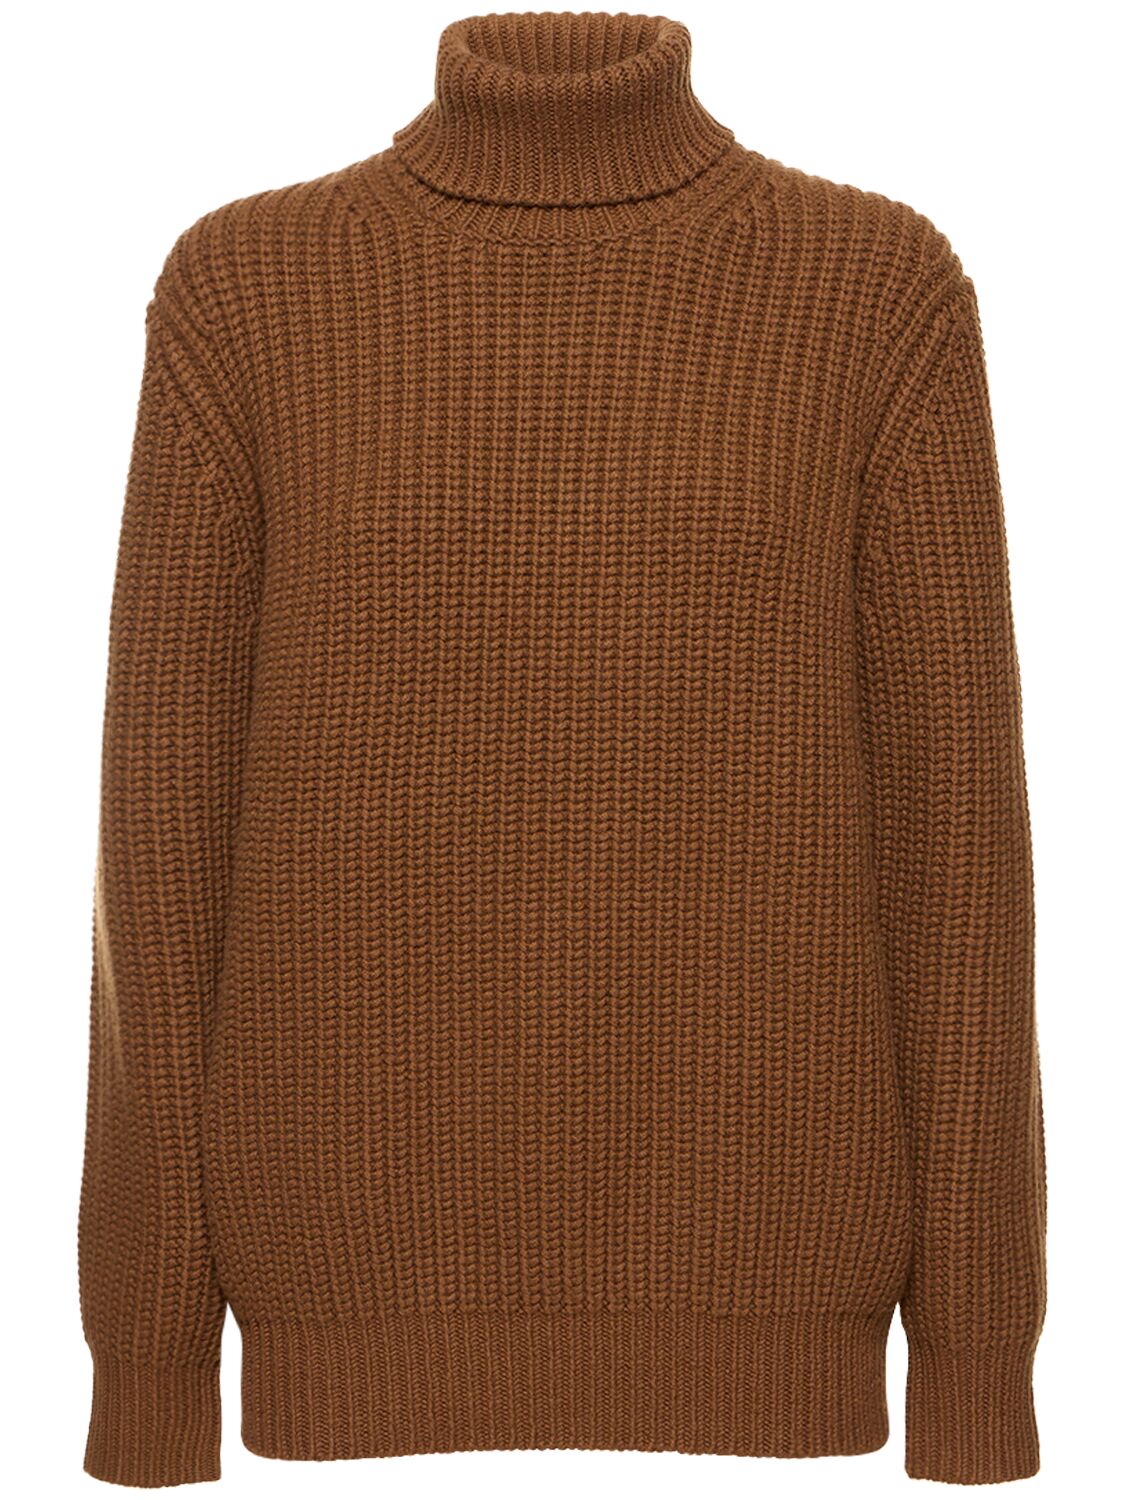 Michael Kors Cashmere Rib Knit Turtleneck Sweater In Light Brown